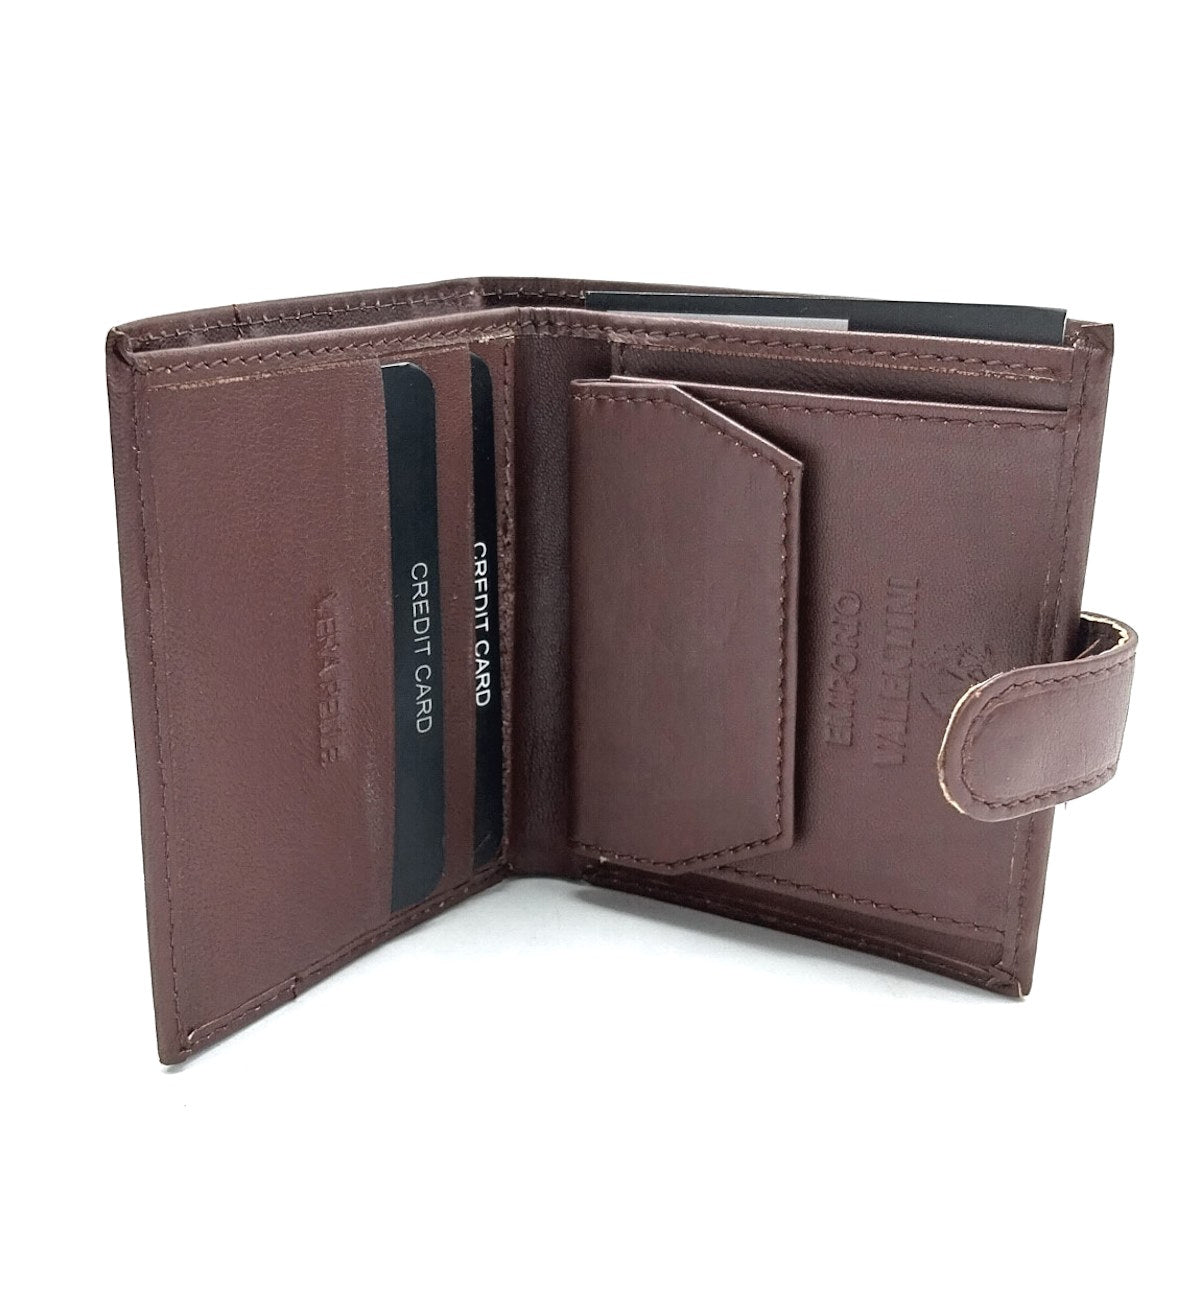 Genuine leather wallet, Emporio Valentini, for men, art. 7P10